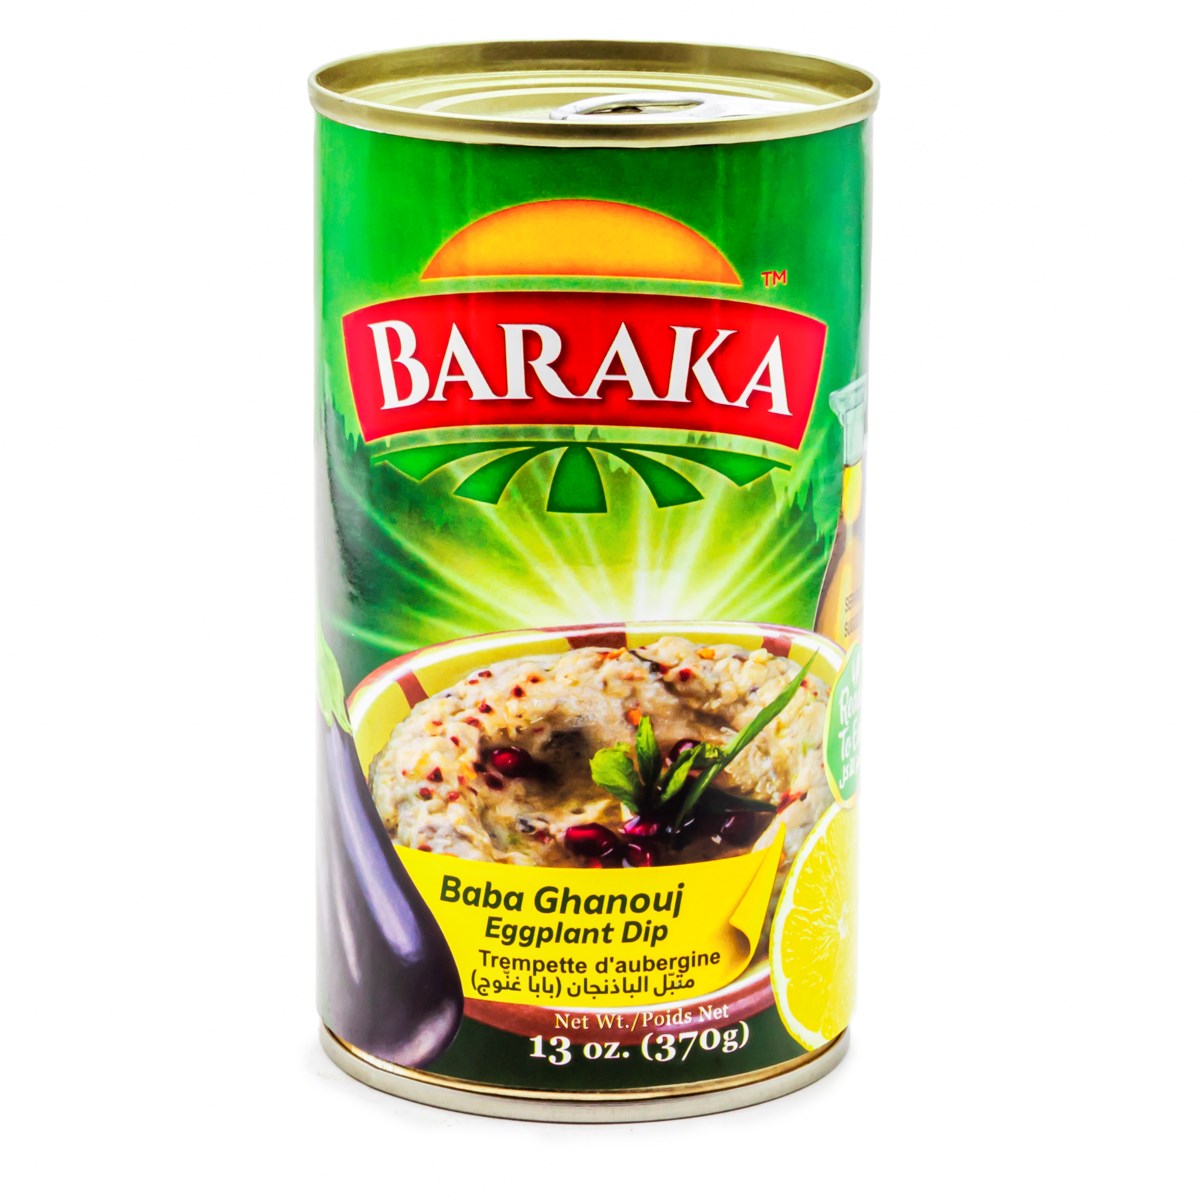 Baba Ghanooj Eggplant Dip "BARAKA" 13 oz x 24